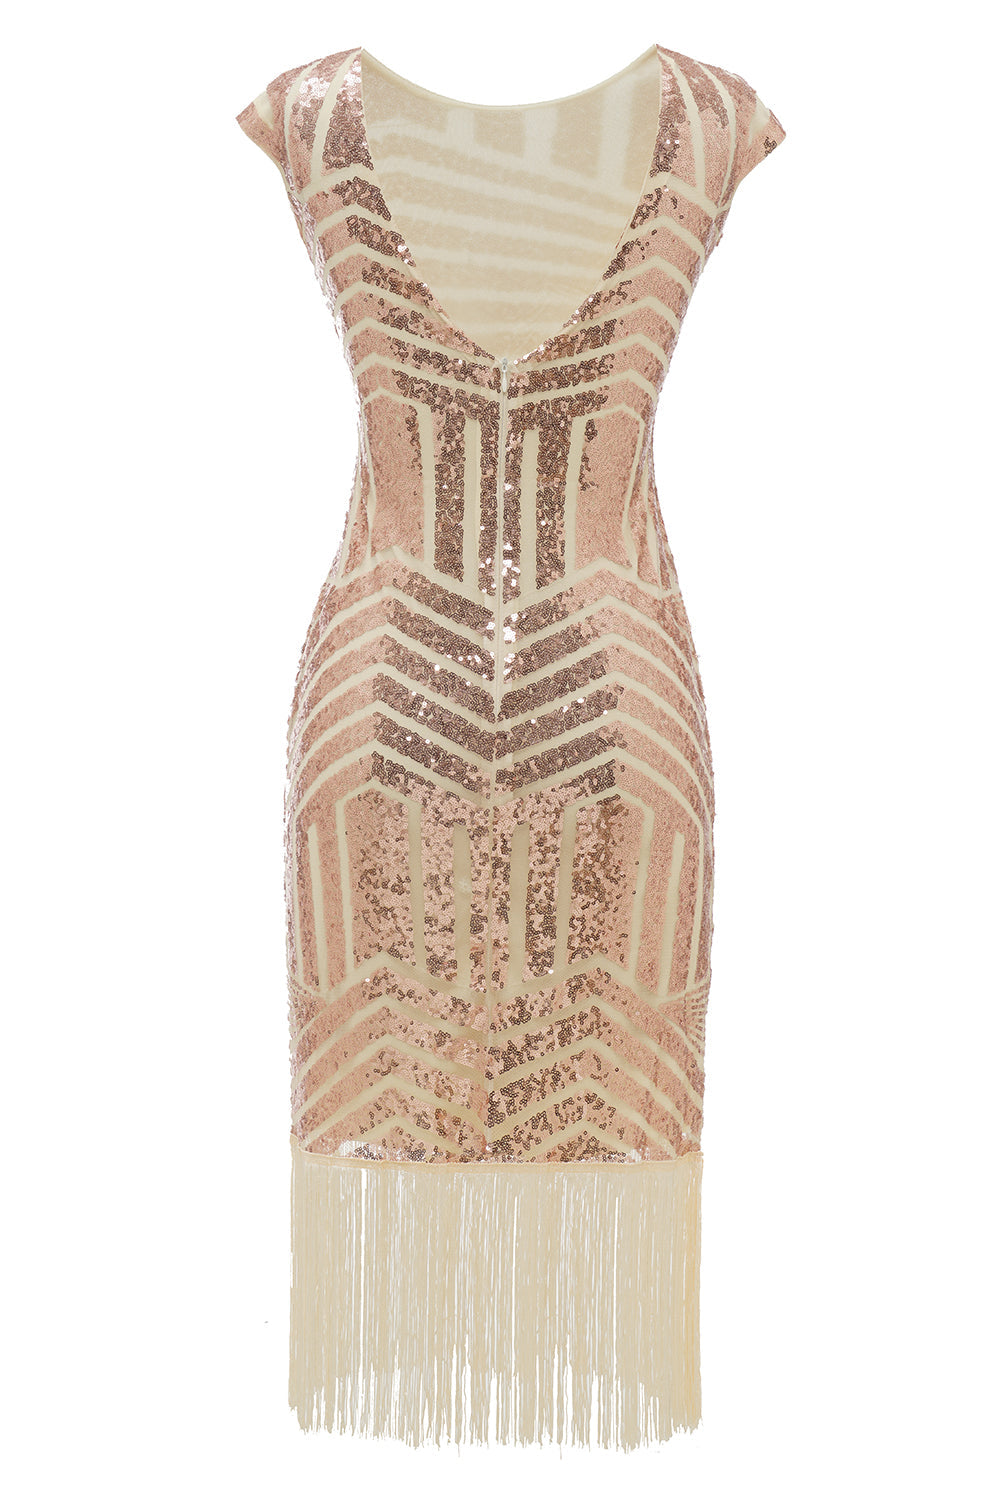 Blush Round Neck 1920s Flapper Dress